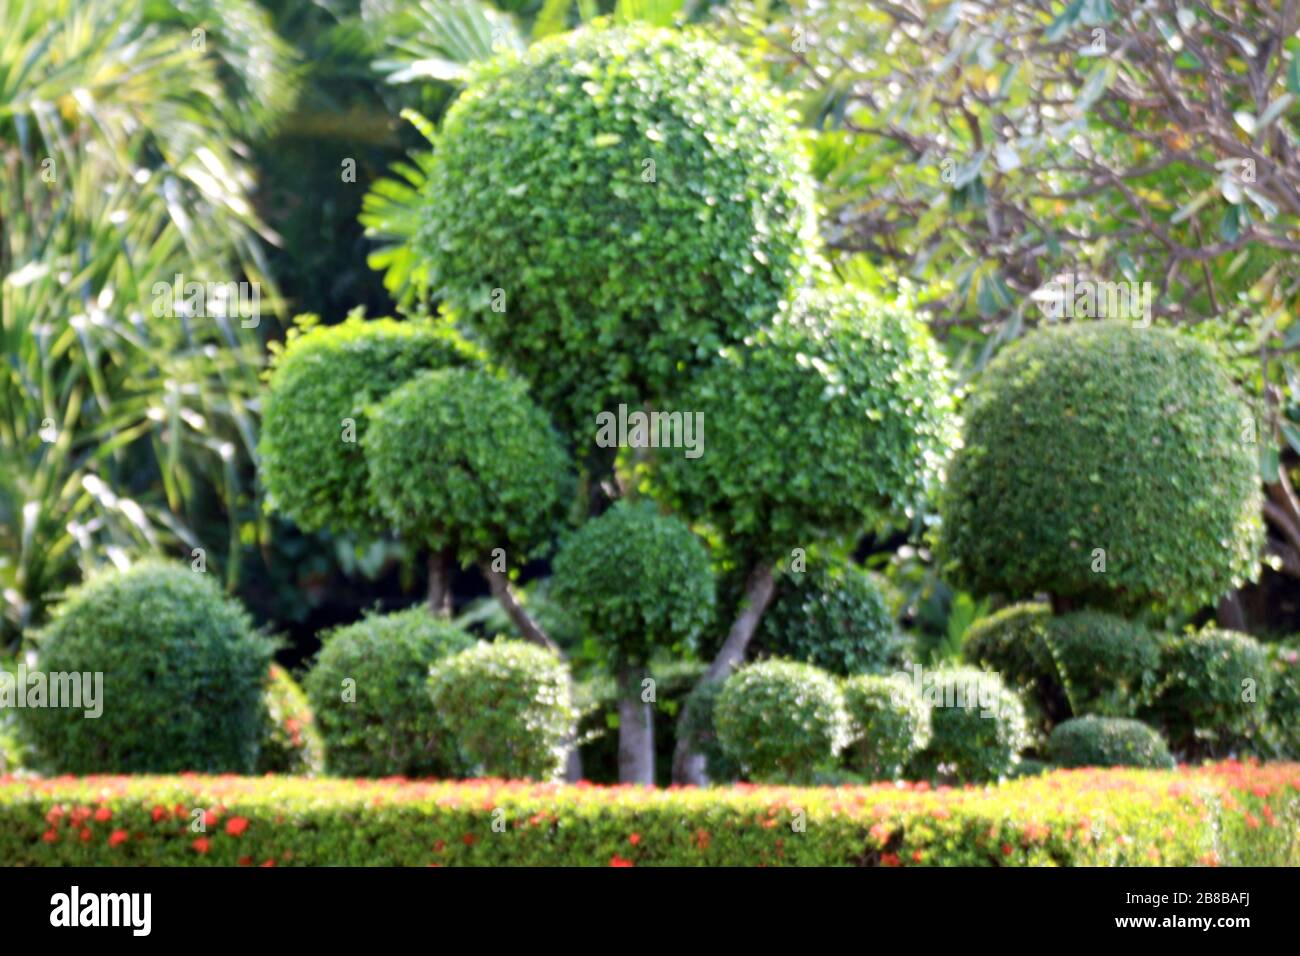 blurred garden tree, blurred background image of bending bushes sphere tree green leaf spherical shrub garden Stock Photo